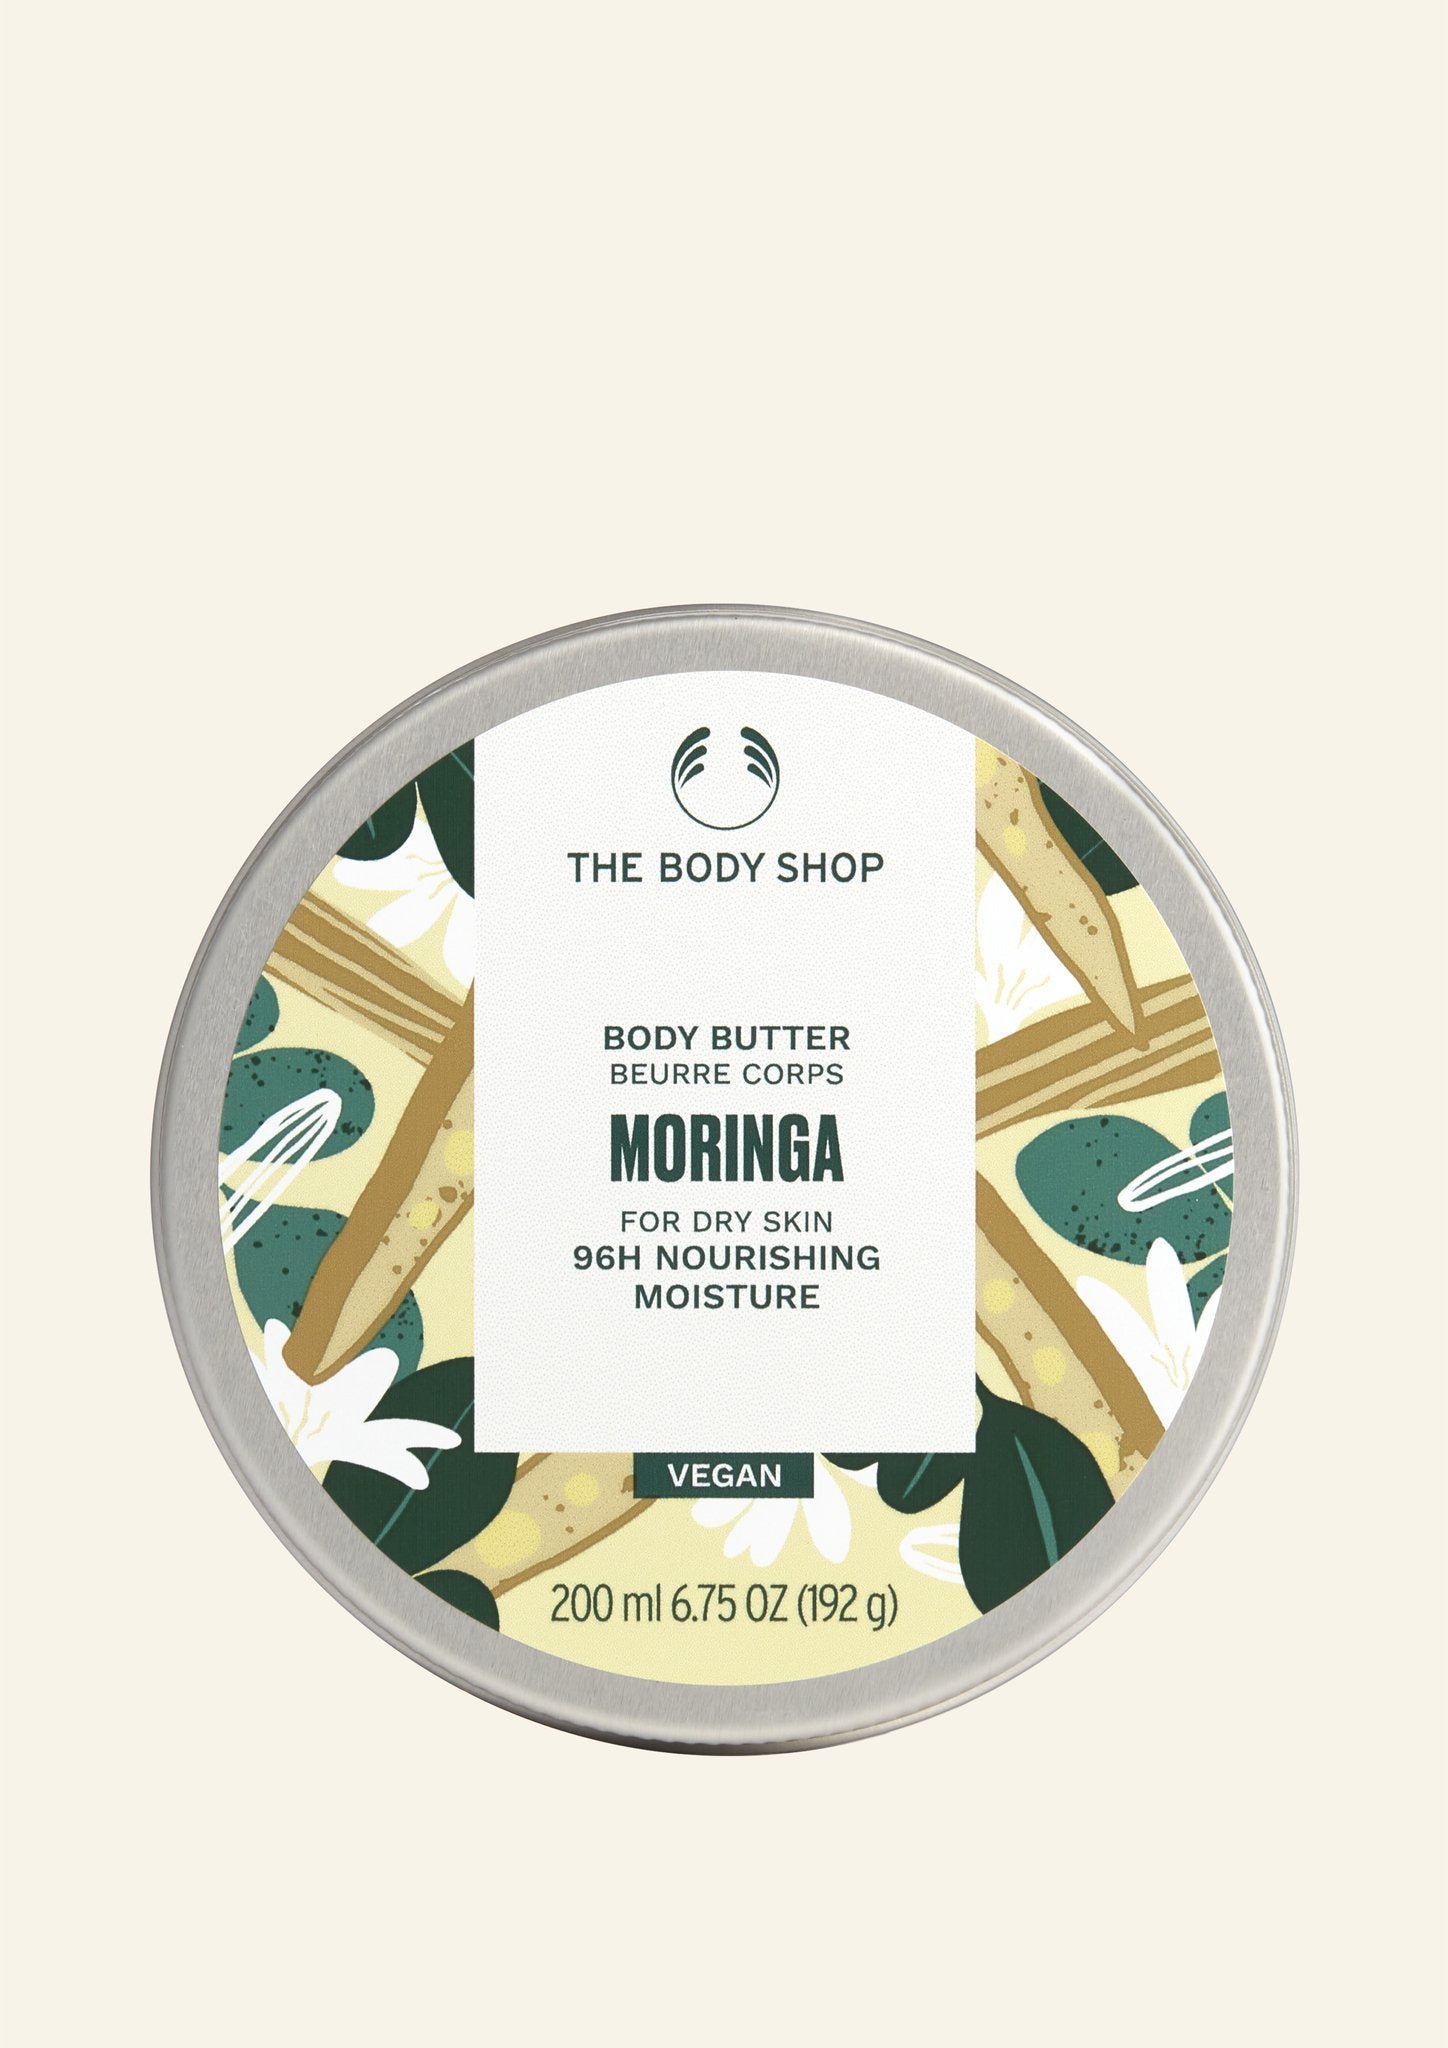 The Body Shop Moringa Body Butter